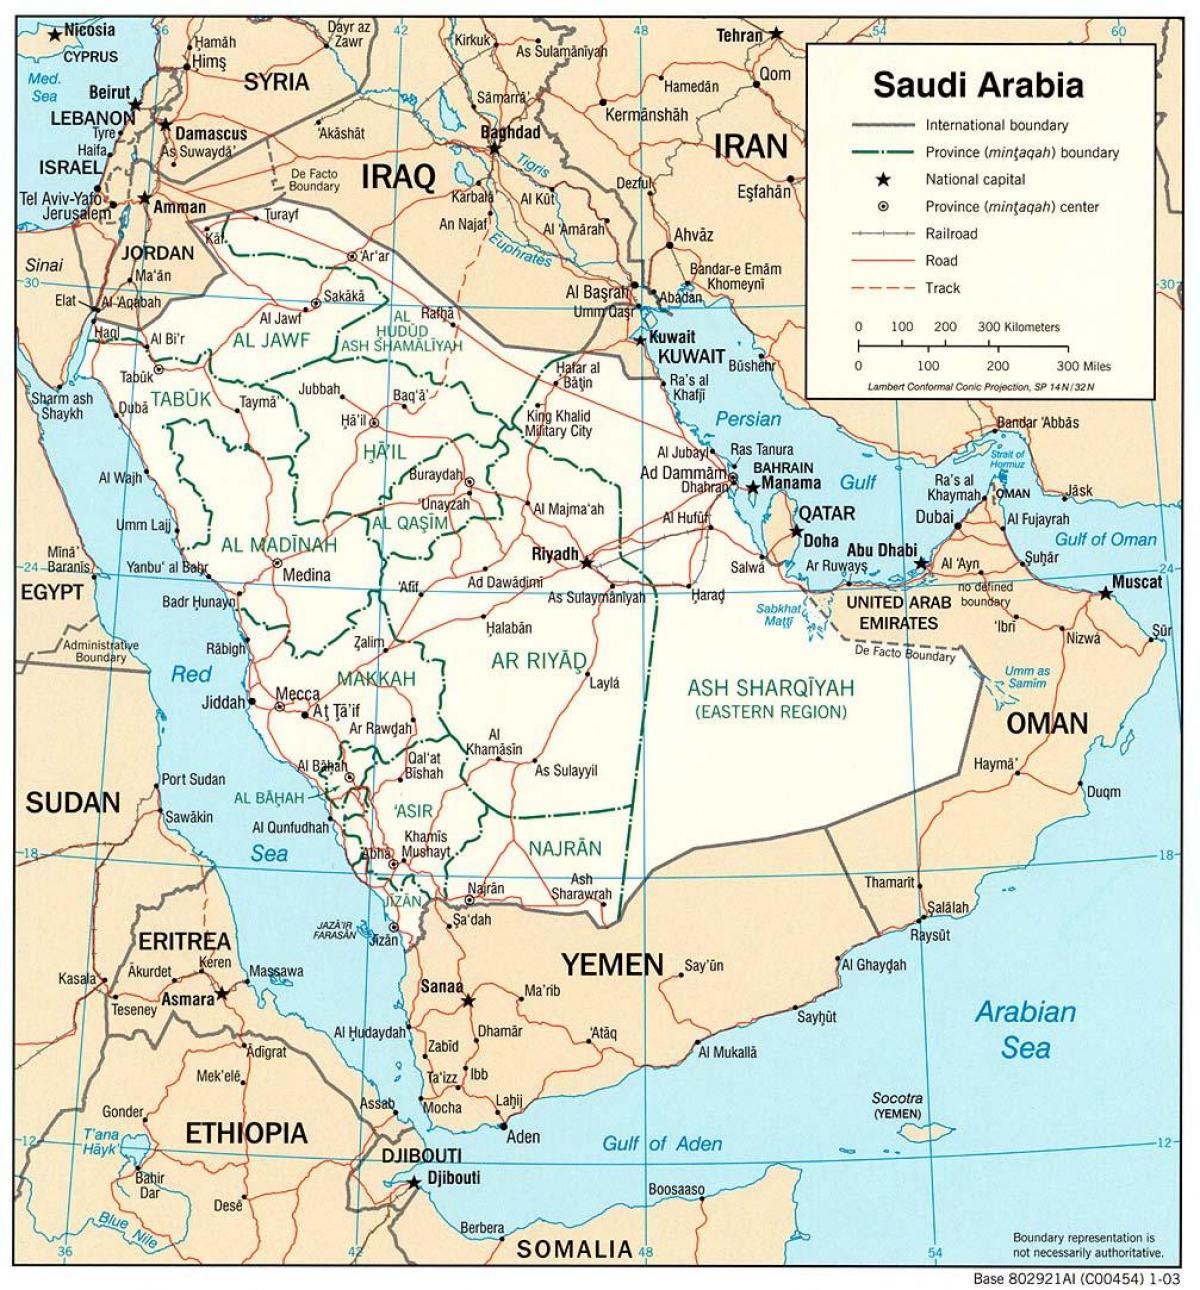 Саудын Араб замын газрын зураг нь